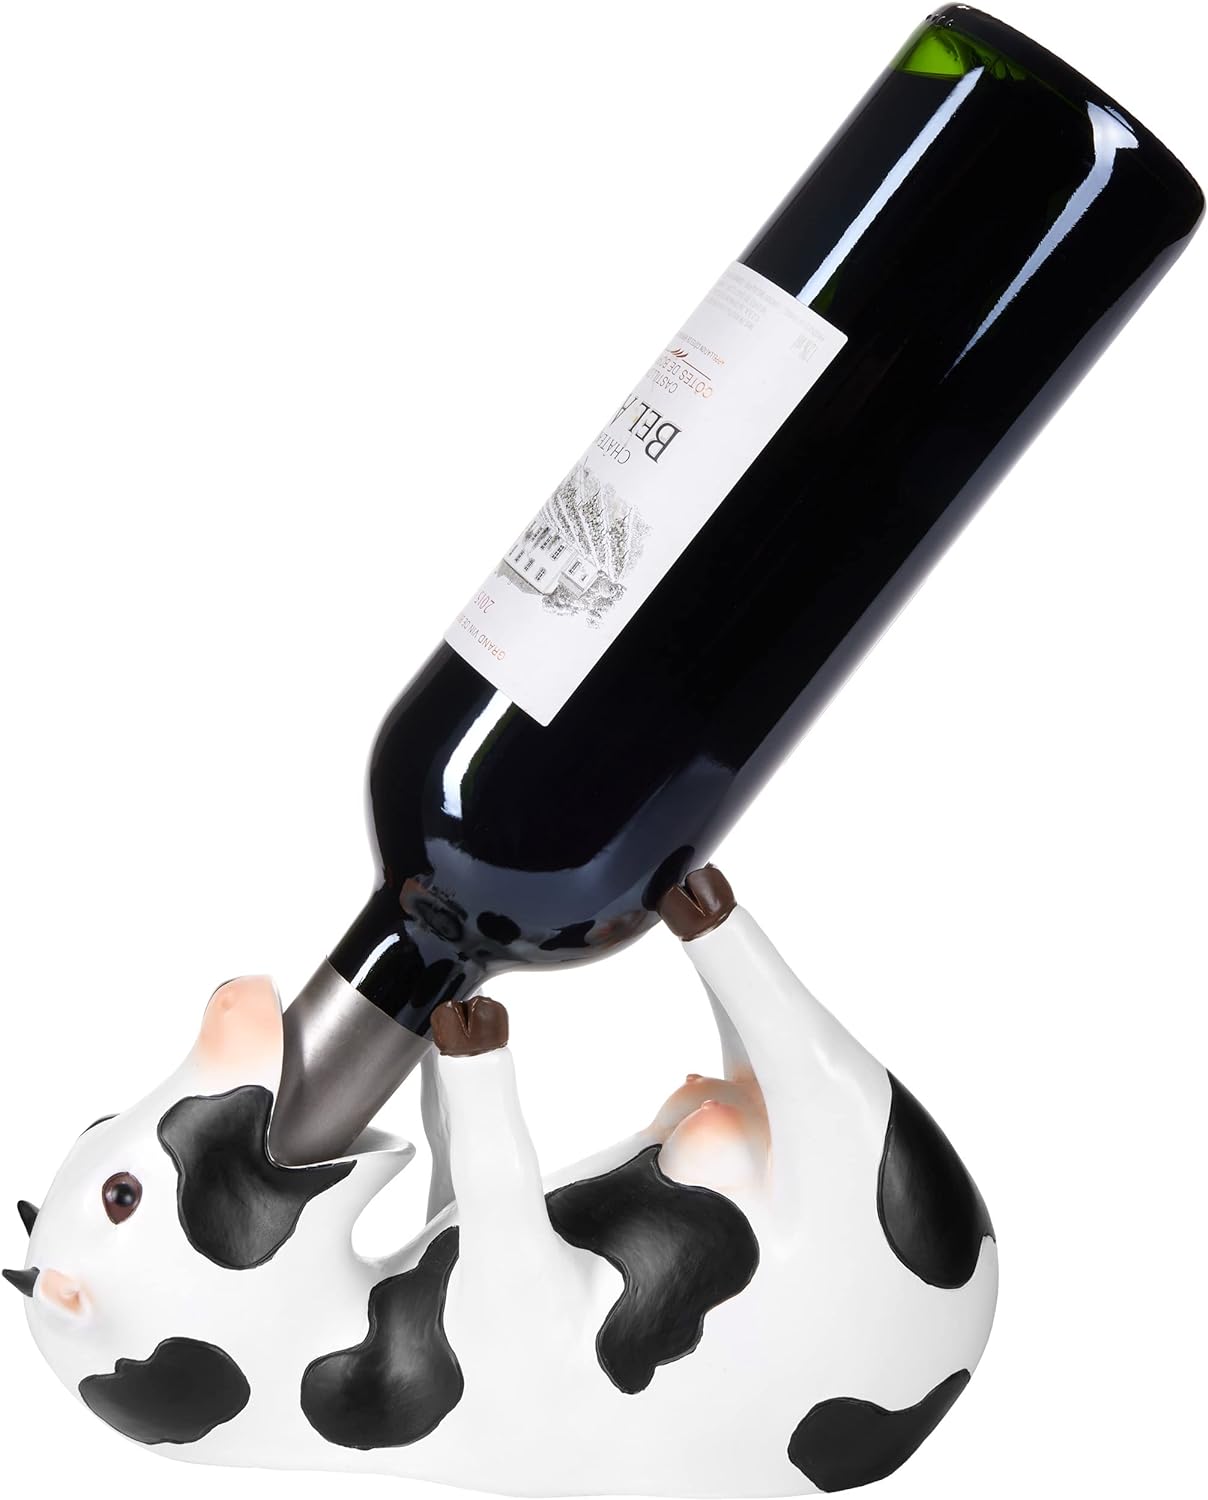 brubaker wijnfleshouder dorstige koe review